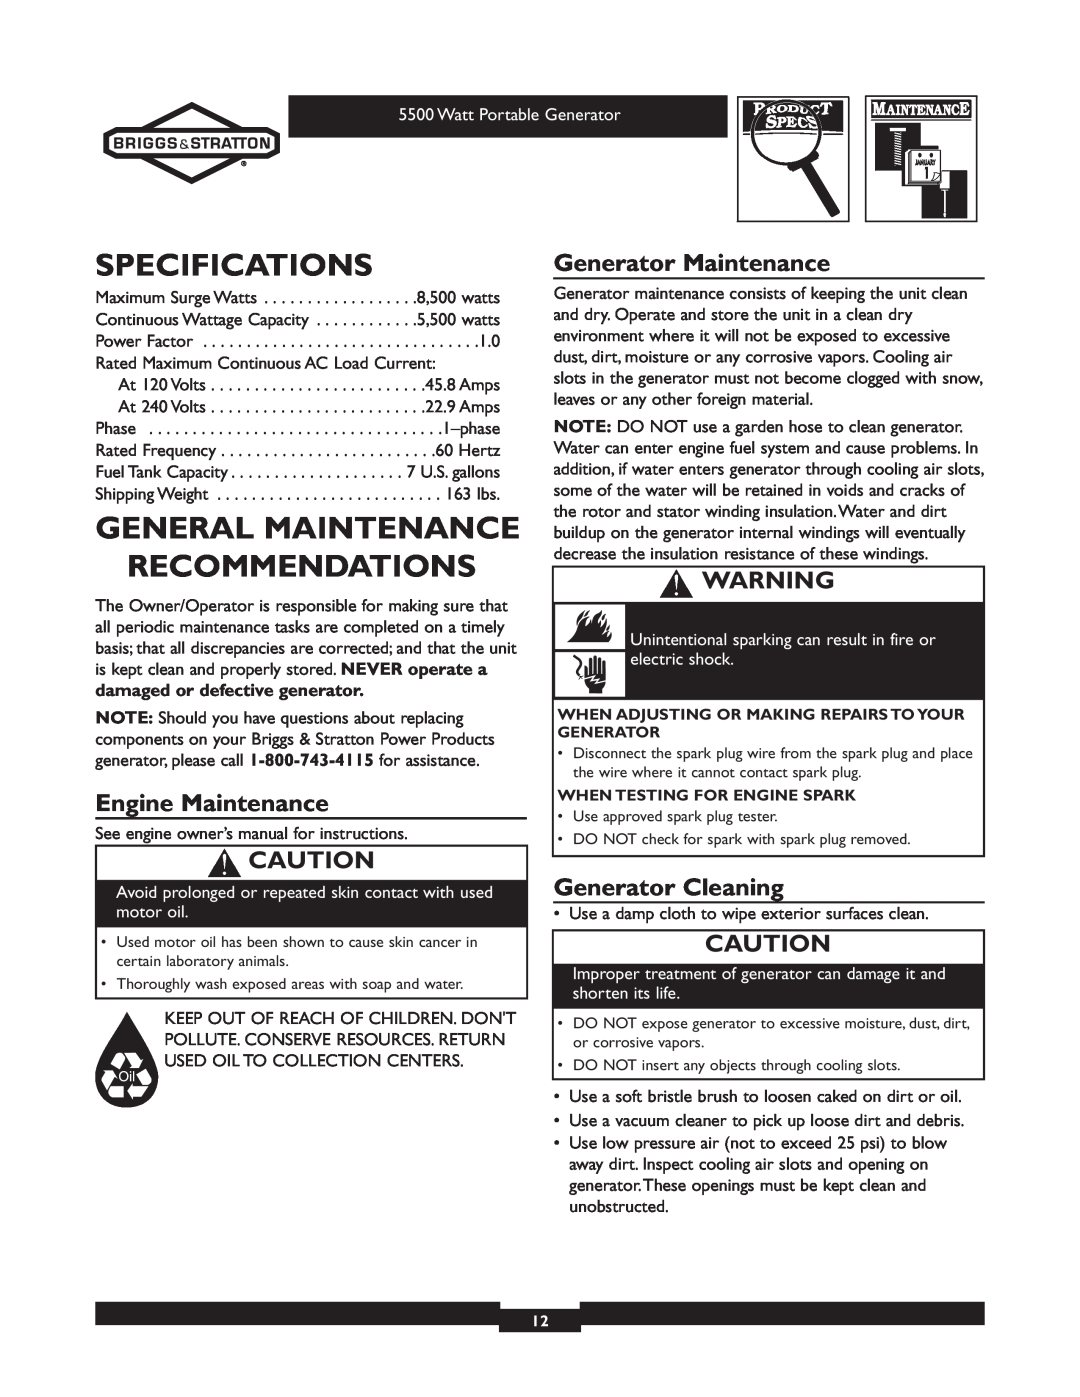 Briggs & Stratton 030206 Specifications, General Maintenance Recommendations, Engine Maintenance, Generator Maintenance 